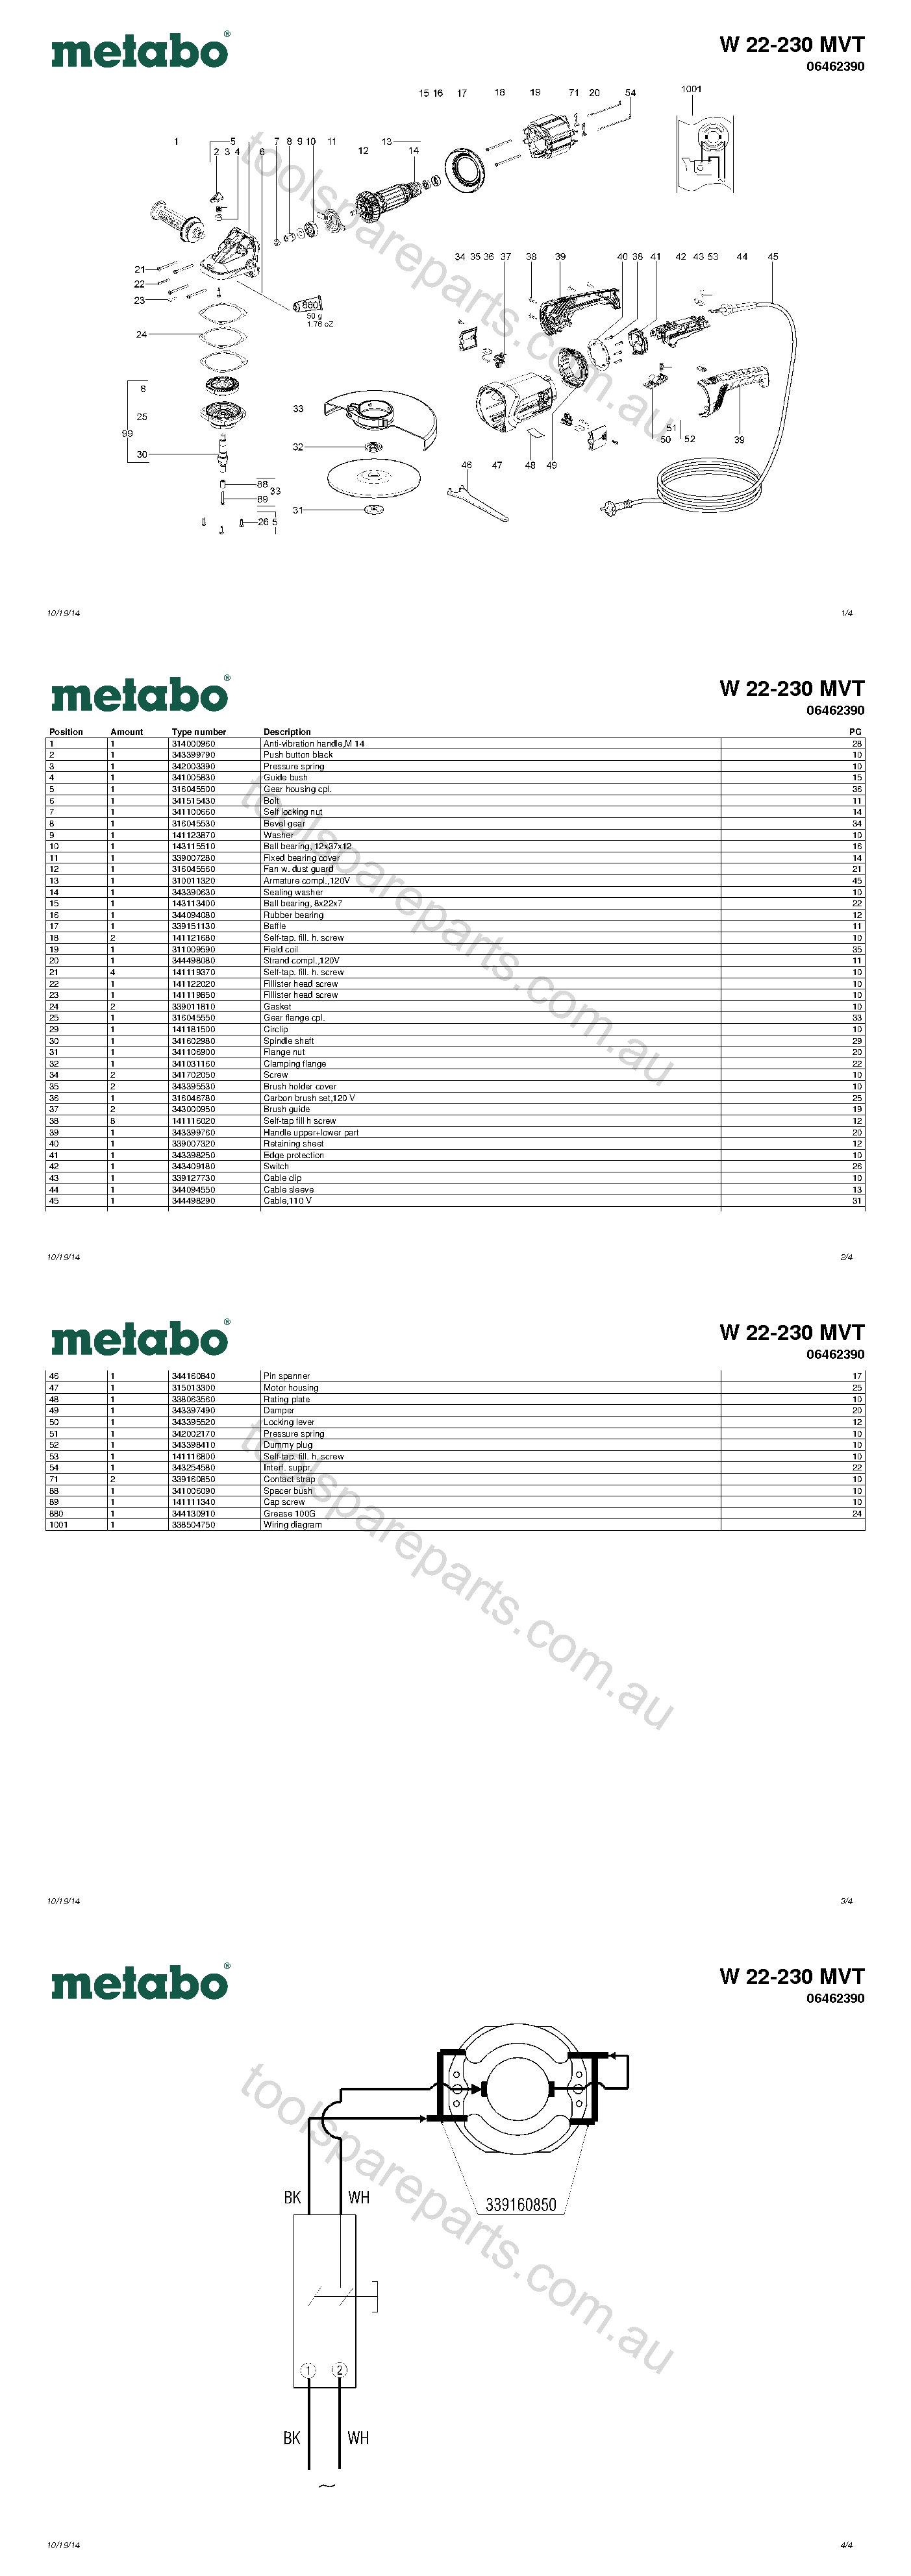 Metabo W 22-230 MVT 06462390  Diagram 1